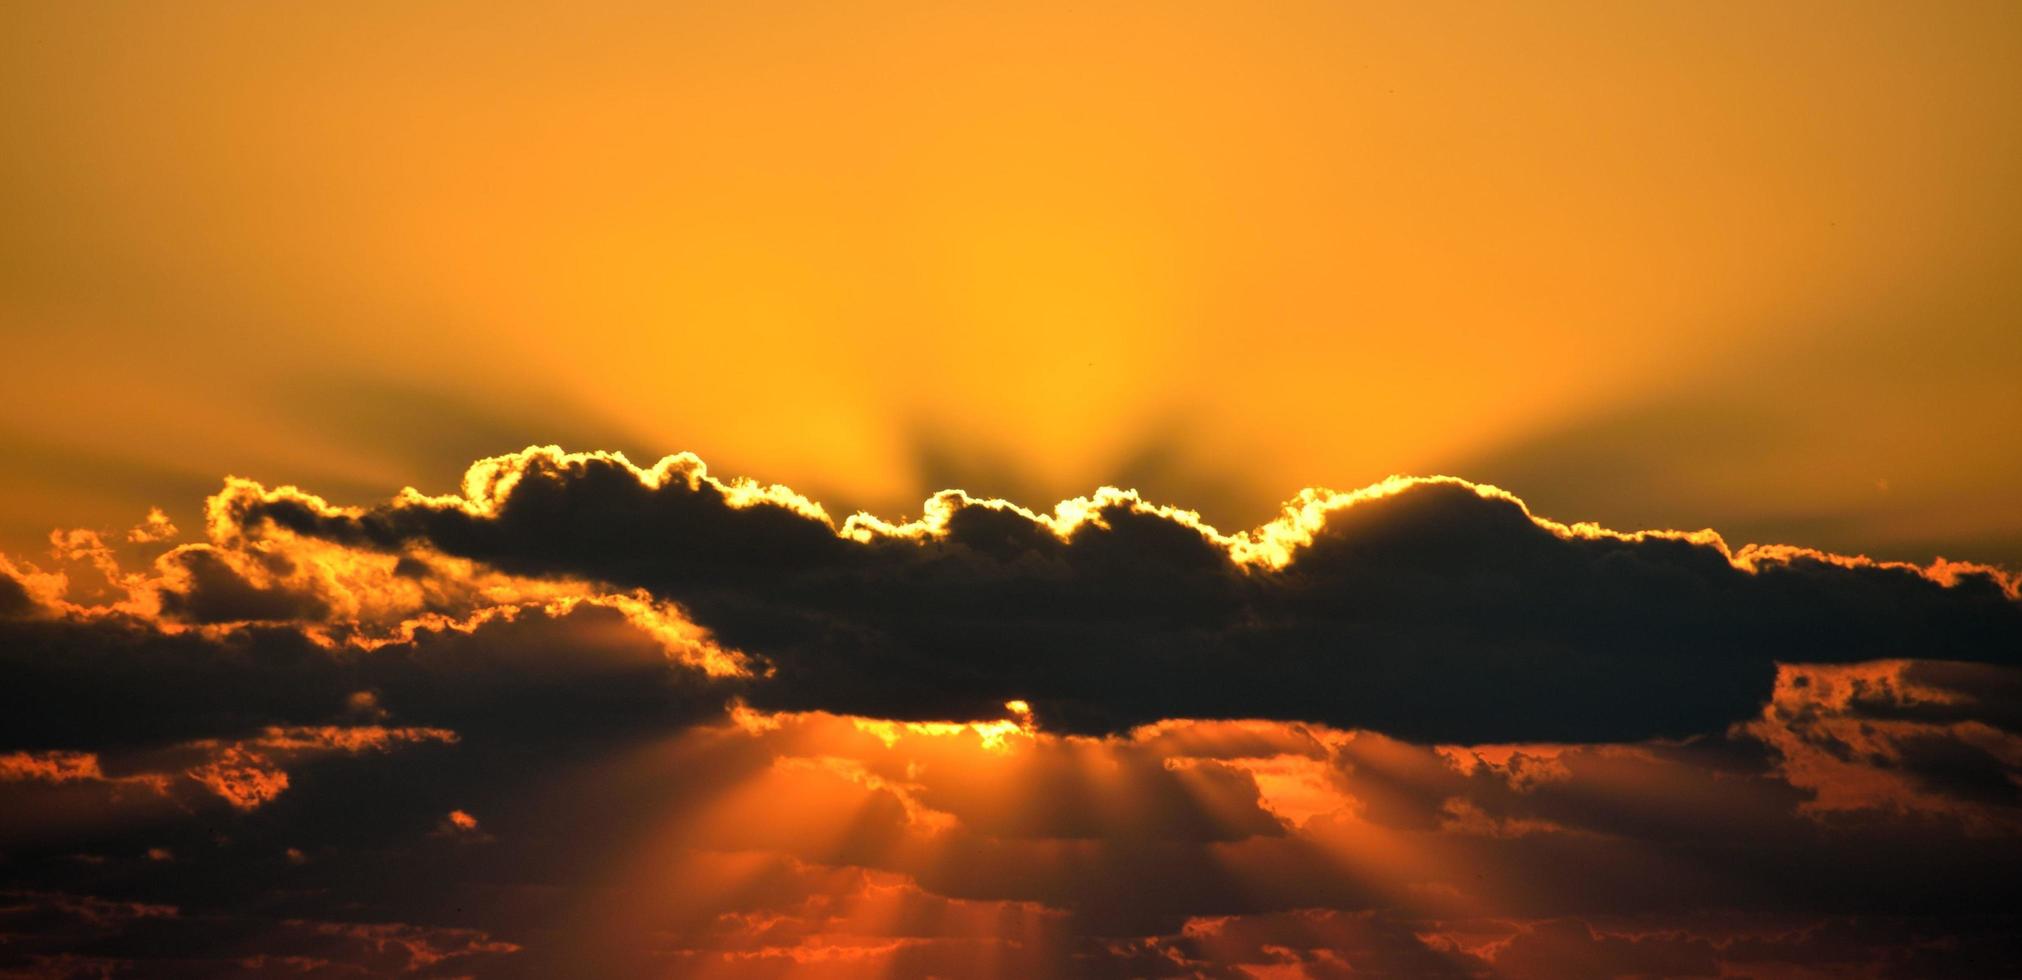 coucher de soleil orange dramatique photo